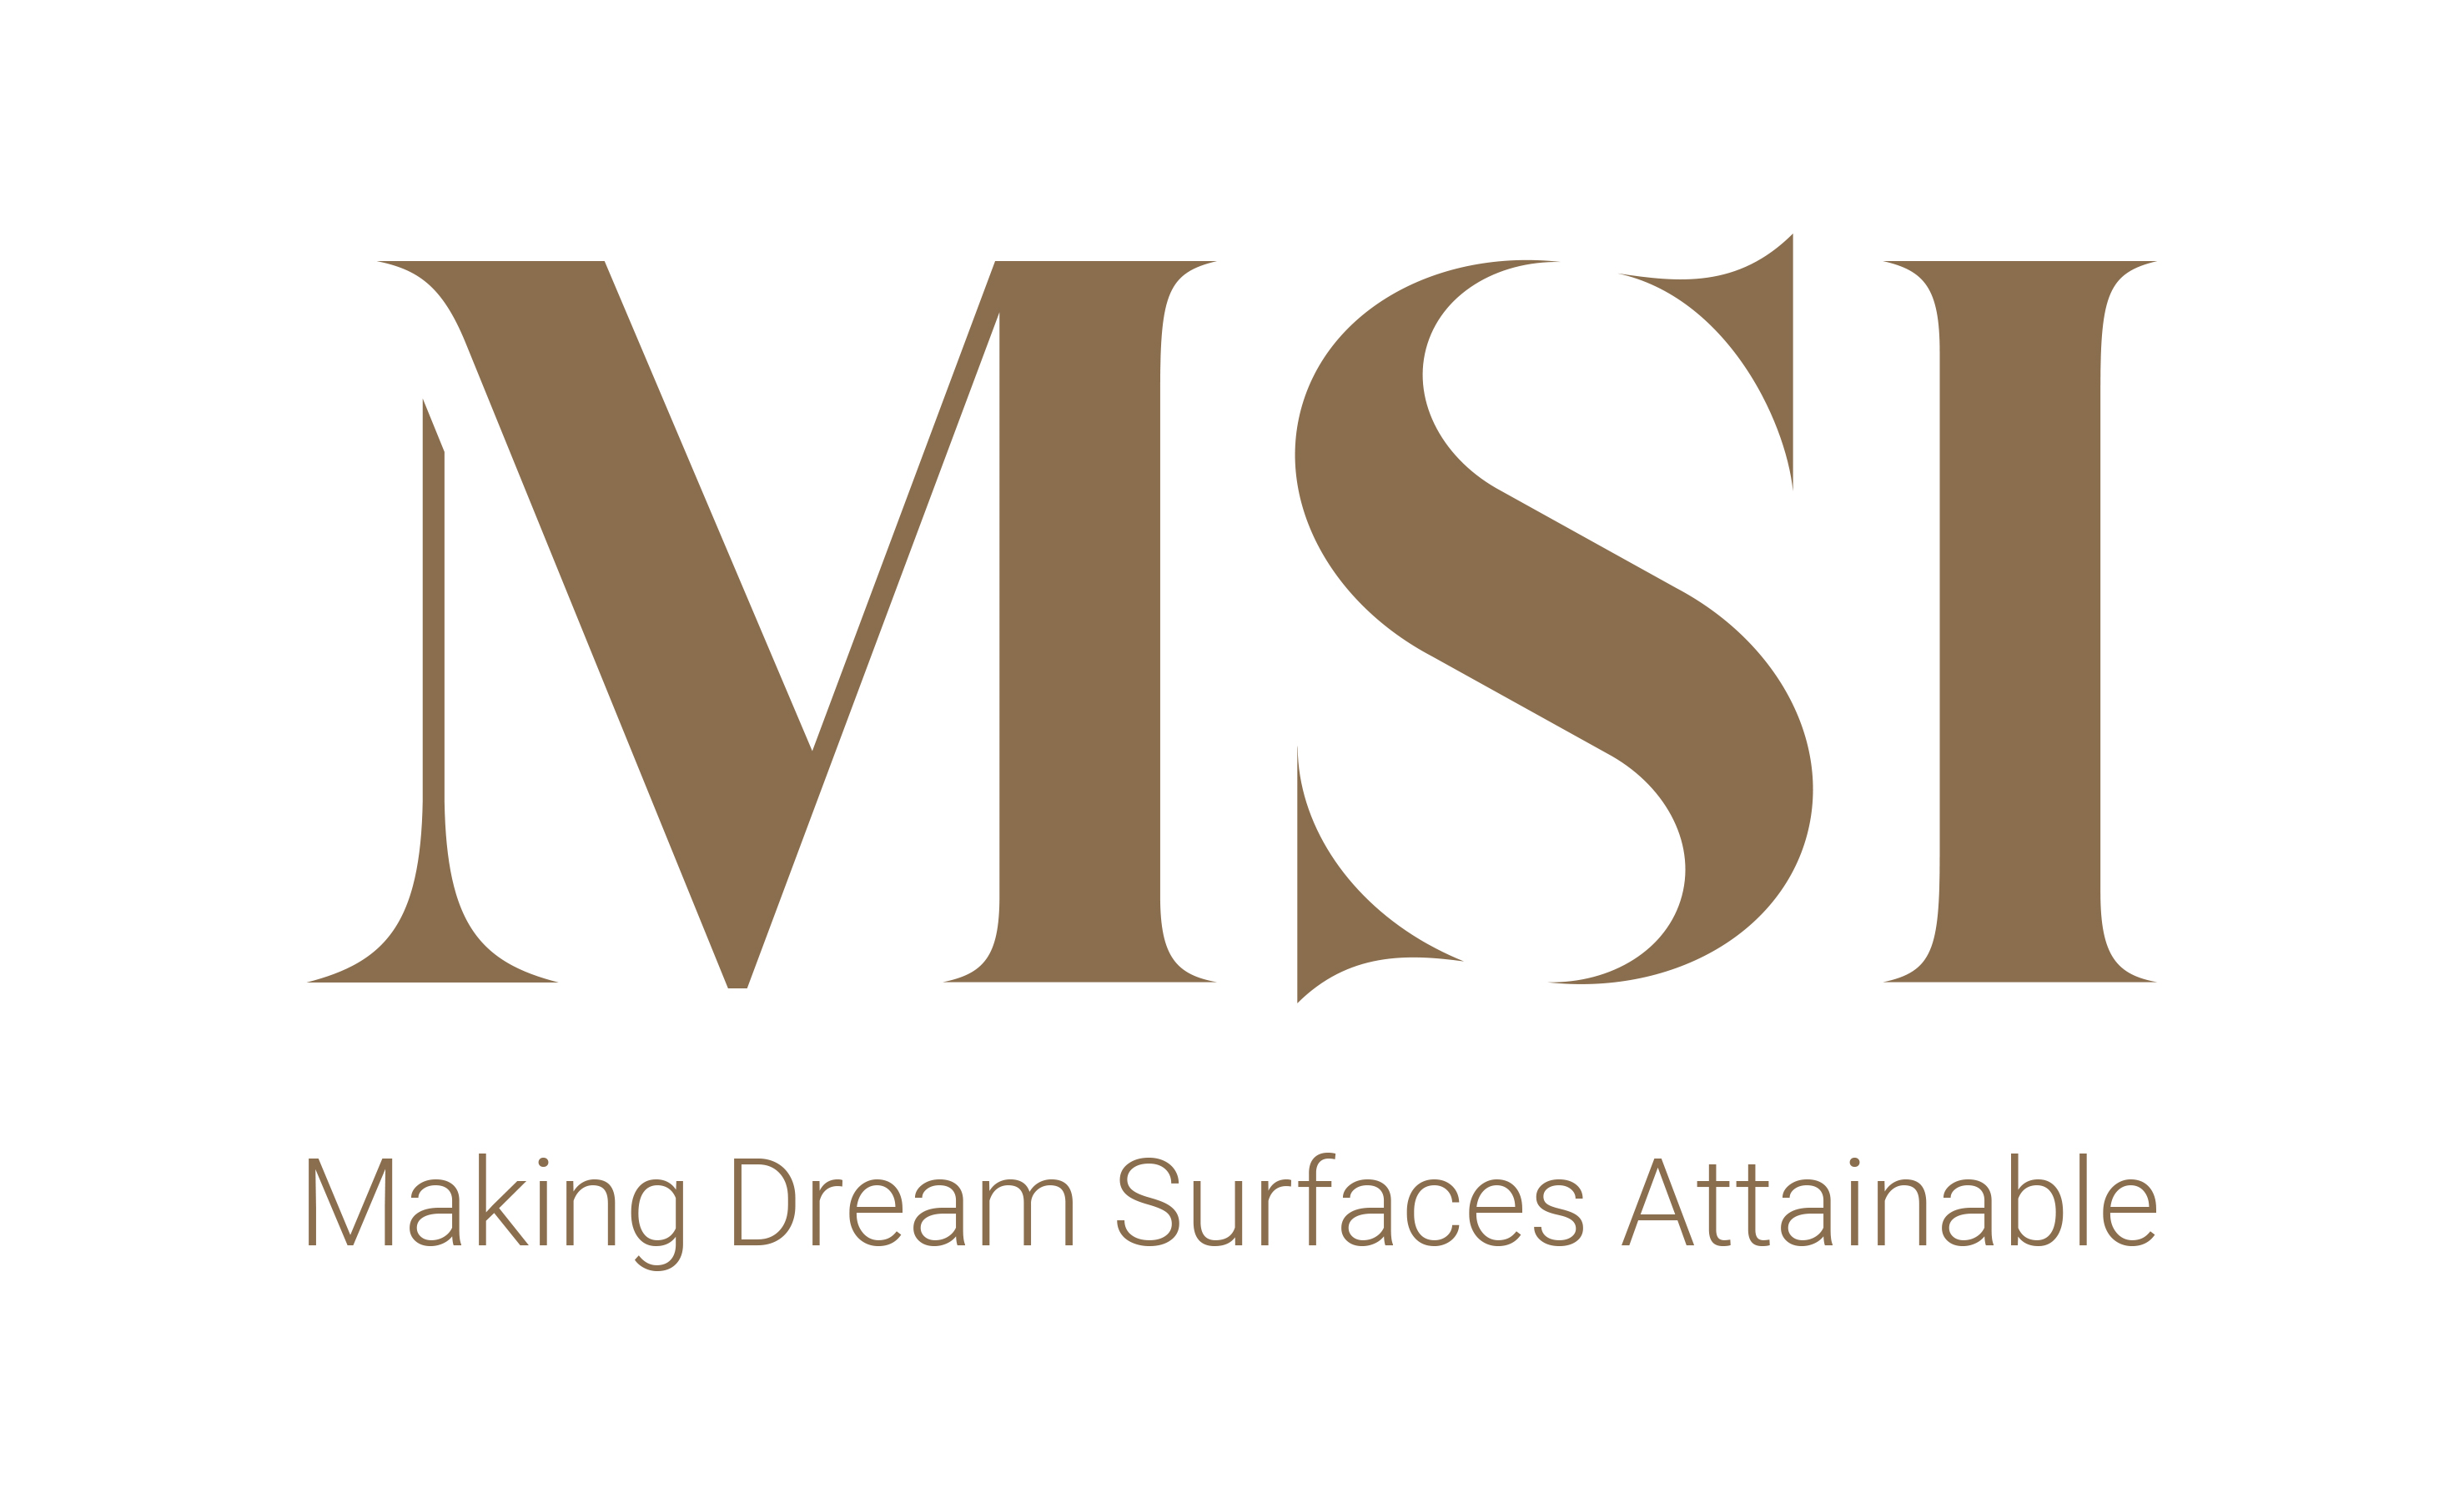 M S International, Inc. logo